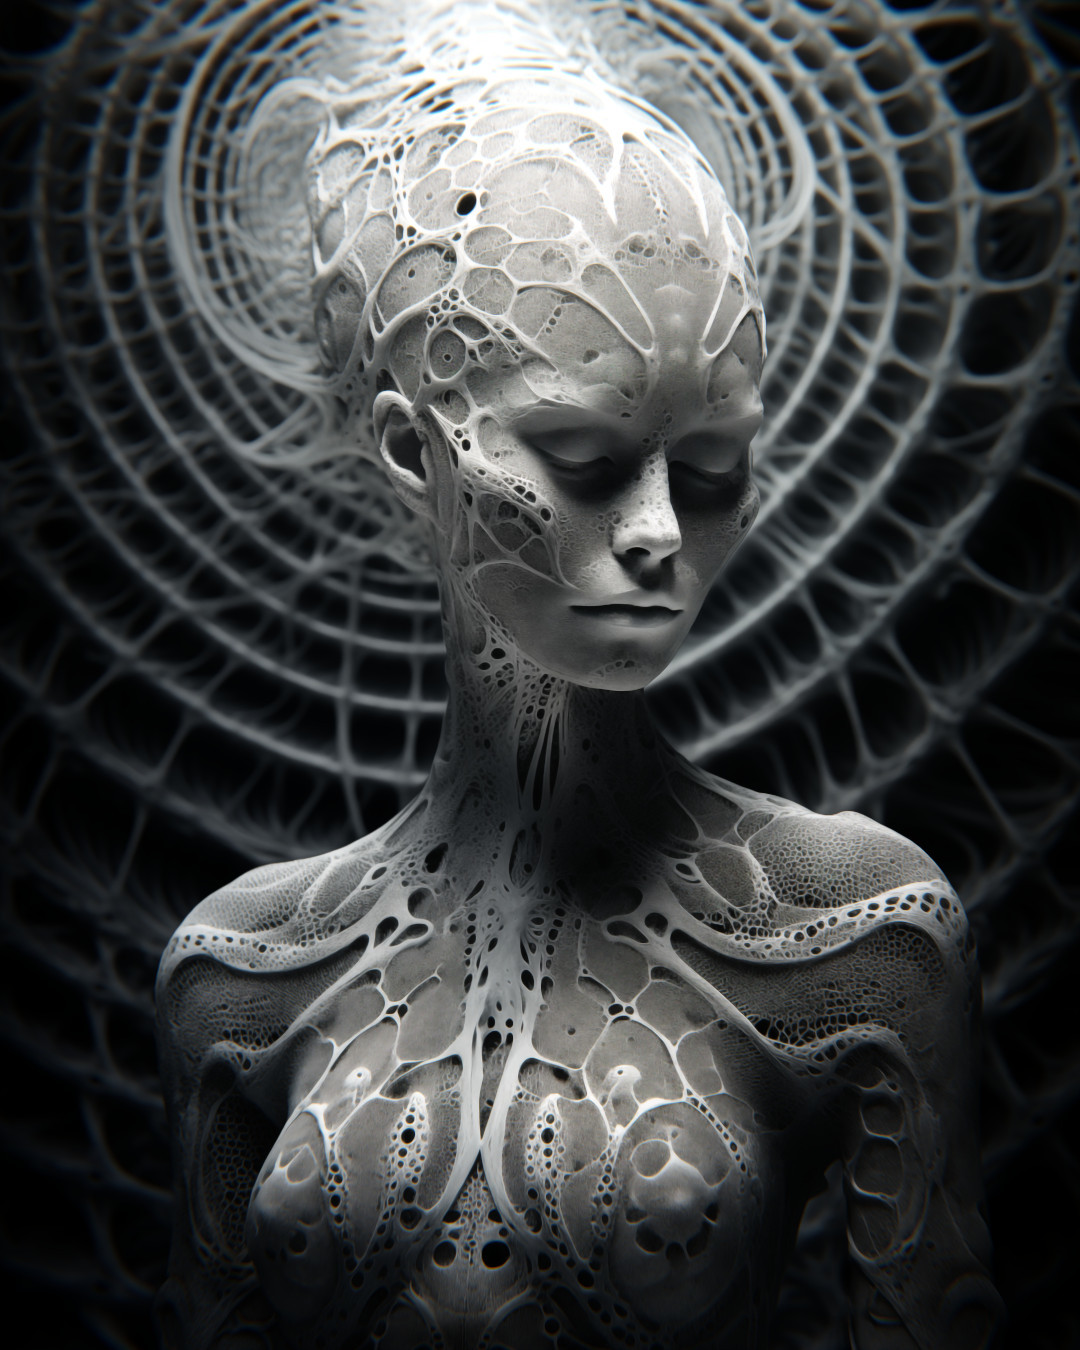 Alien woman, intricately detailed patterns, monochrome portrait